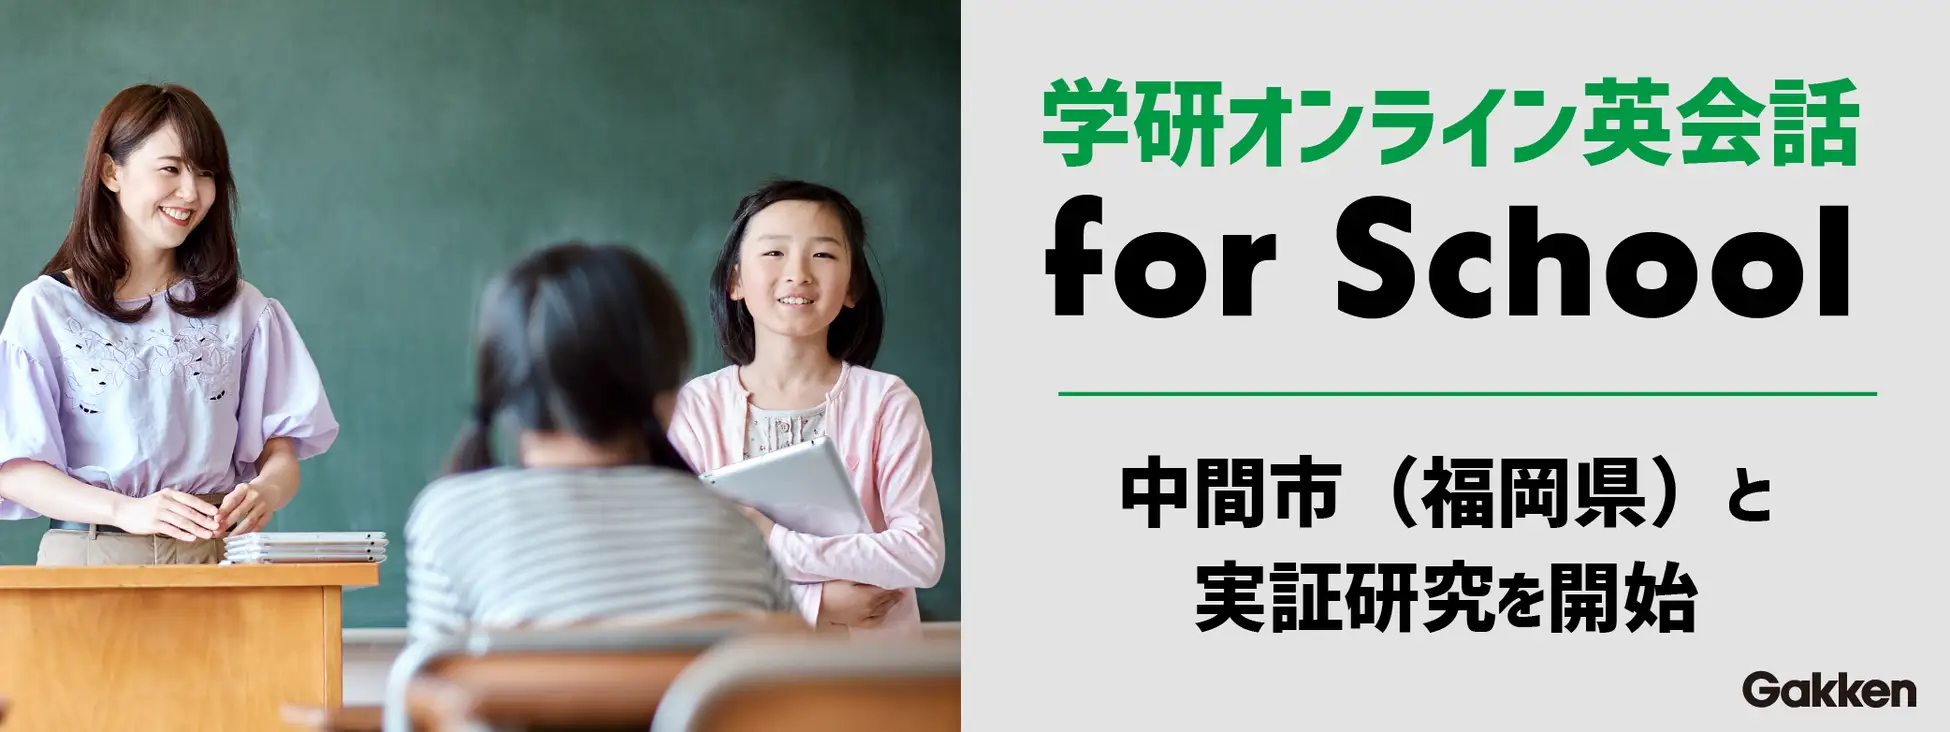 Gakken　福岡県中間市とオンライン英会話活用について実証研究を開始～小学校を対象としたGIGAスクール構想における取り組み～